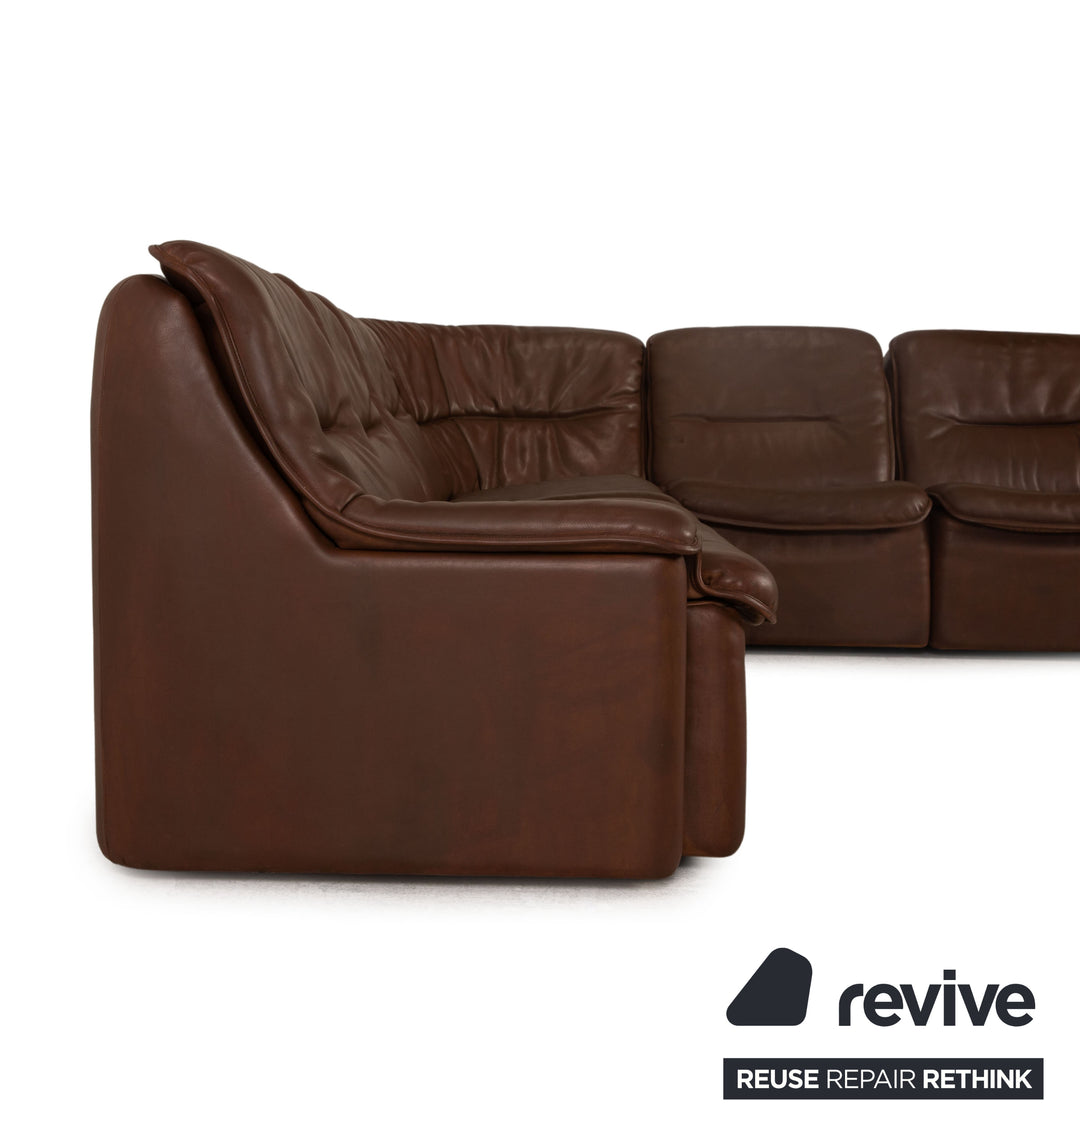 de Sede DS 66 leather corner sofa brown sofa couch exclusive